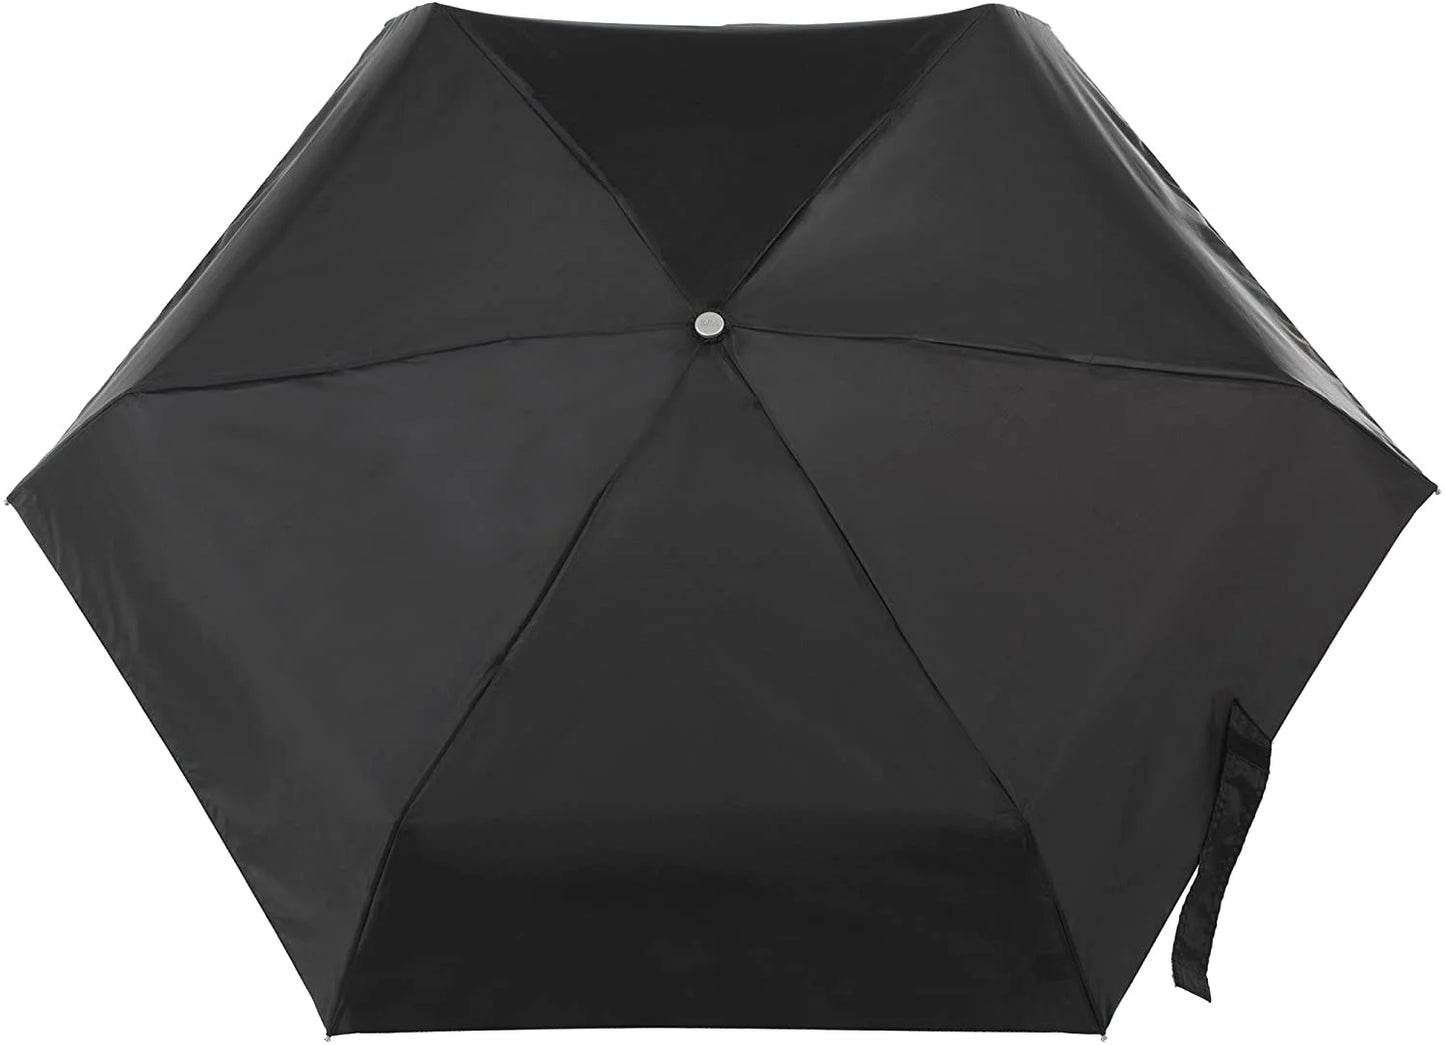 Sunguard Auto Open Close Mini Umbrella with Neverwet, Black